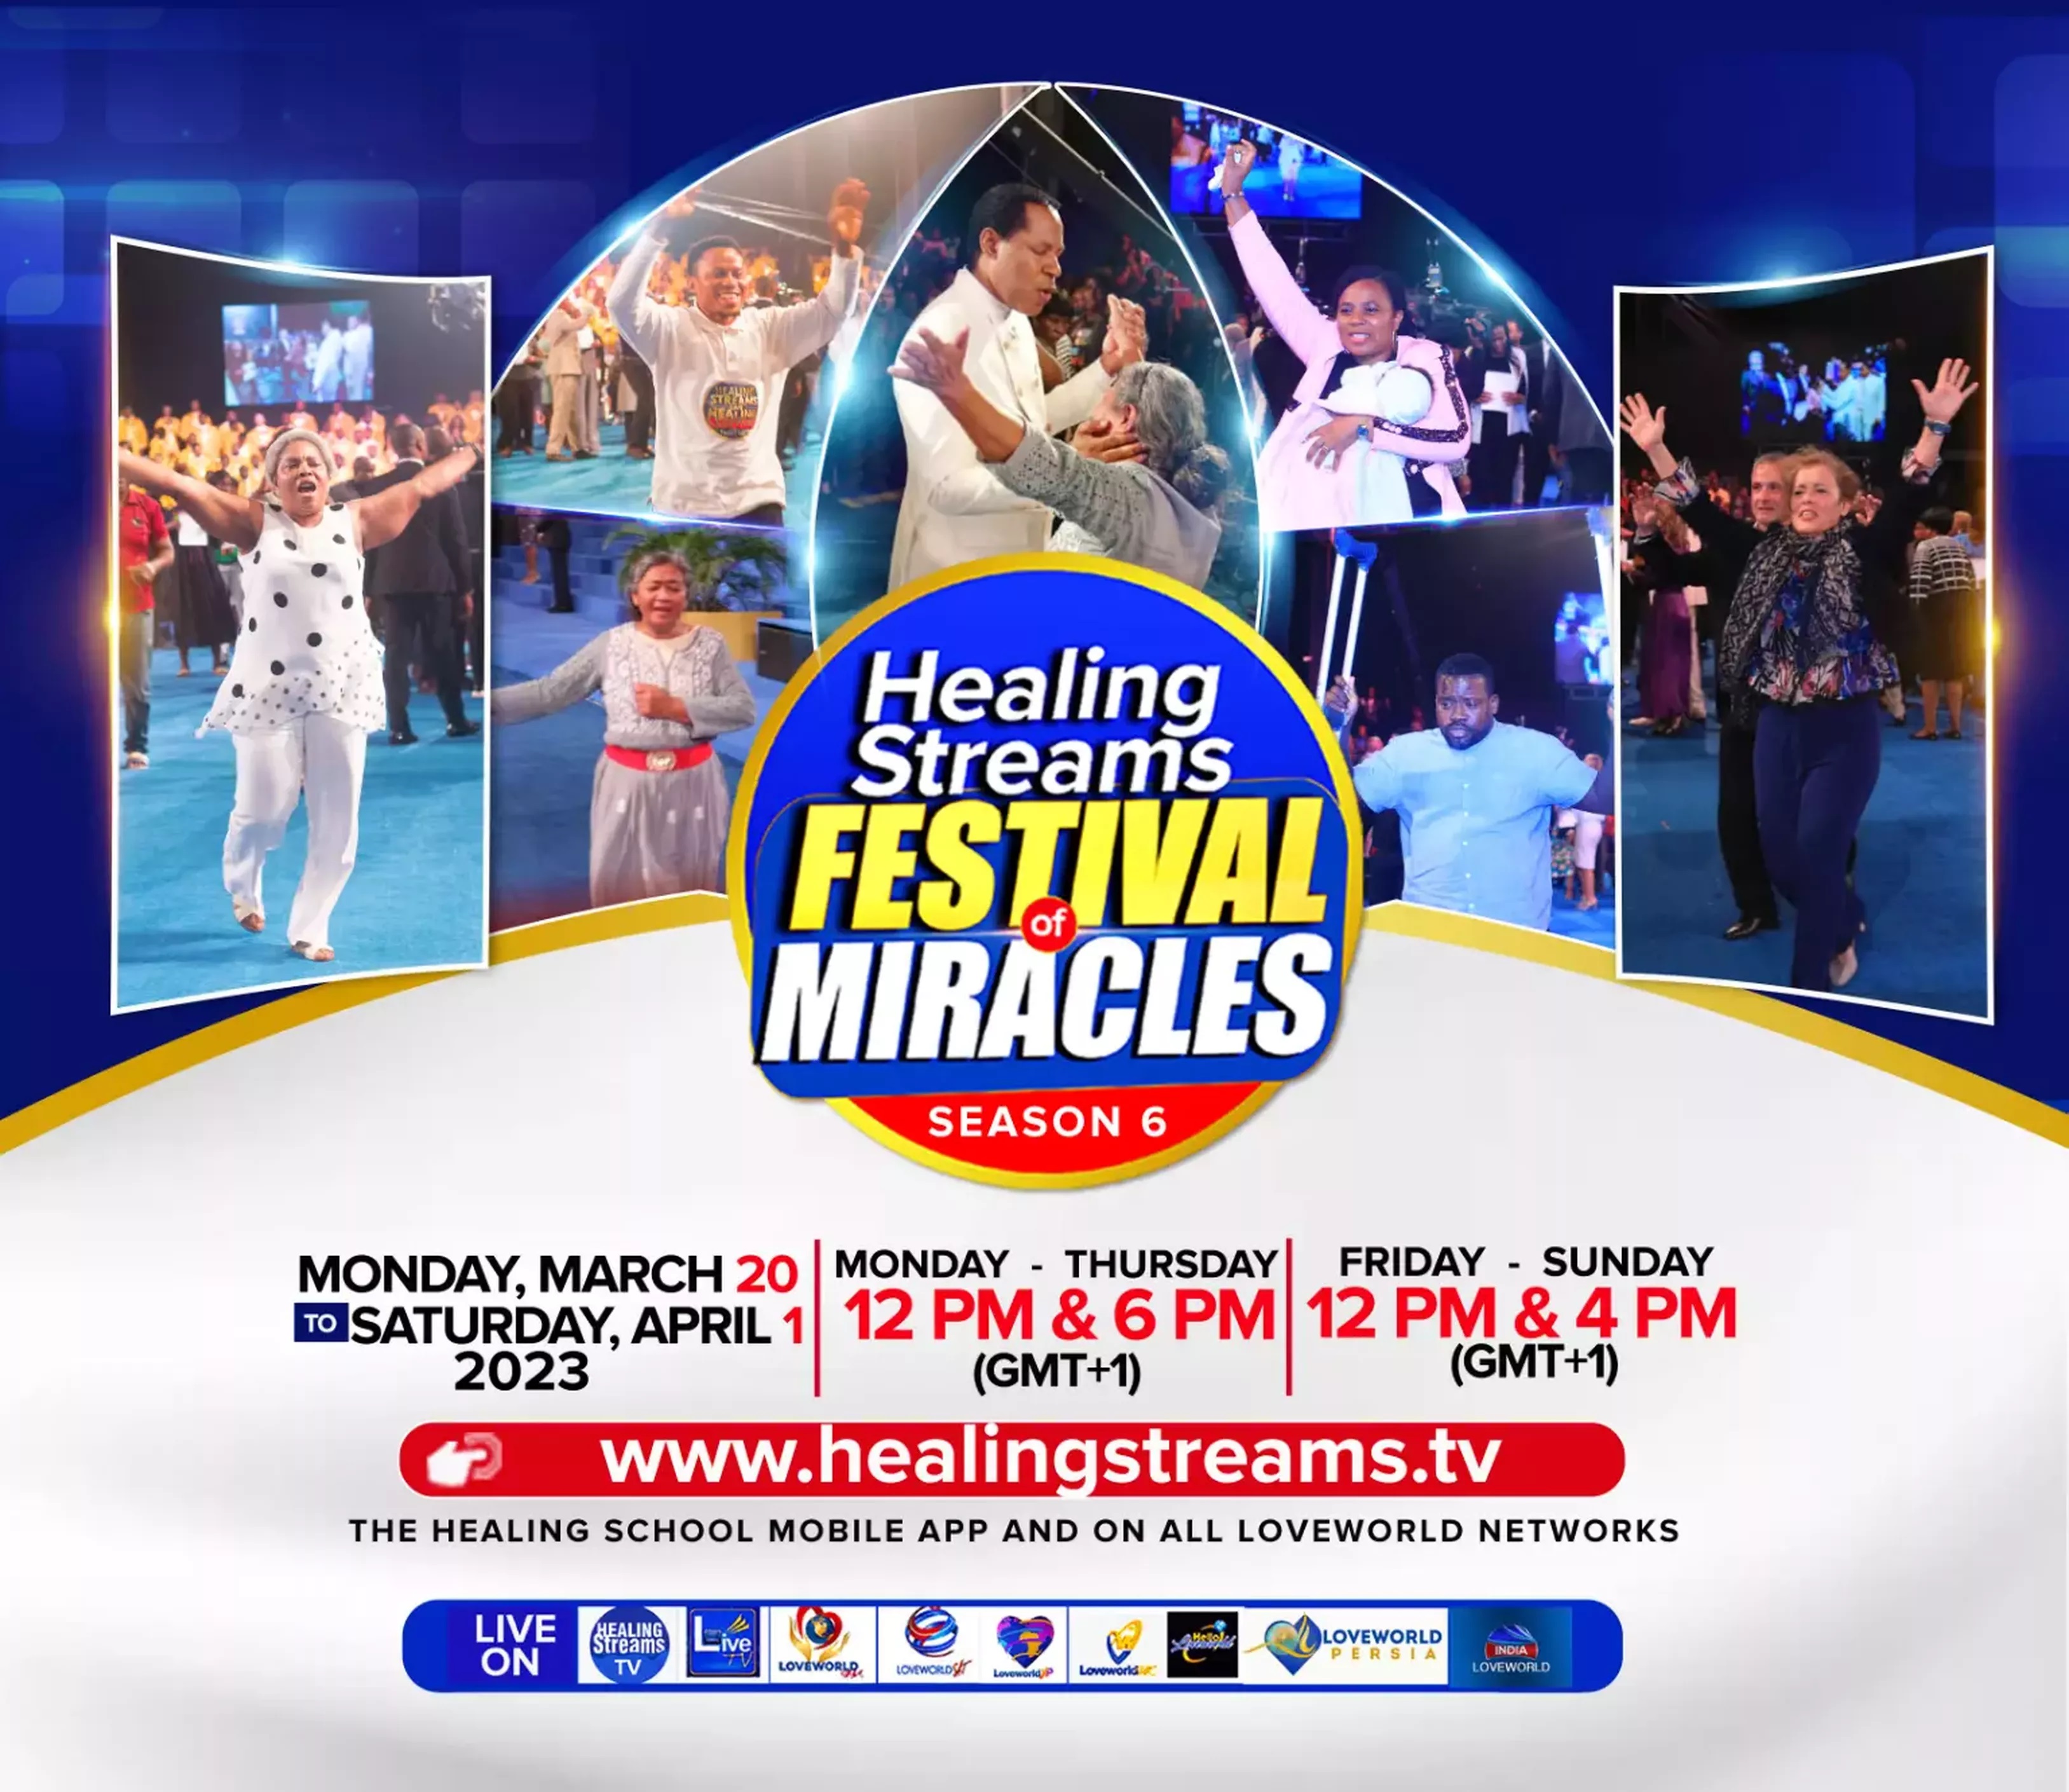 HEALING STREAMS FESTIVAL OF MIRACLES SEASON 6